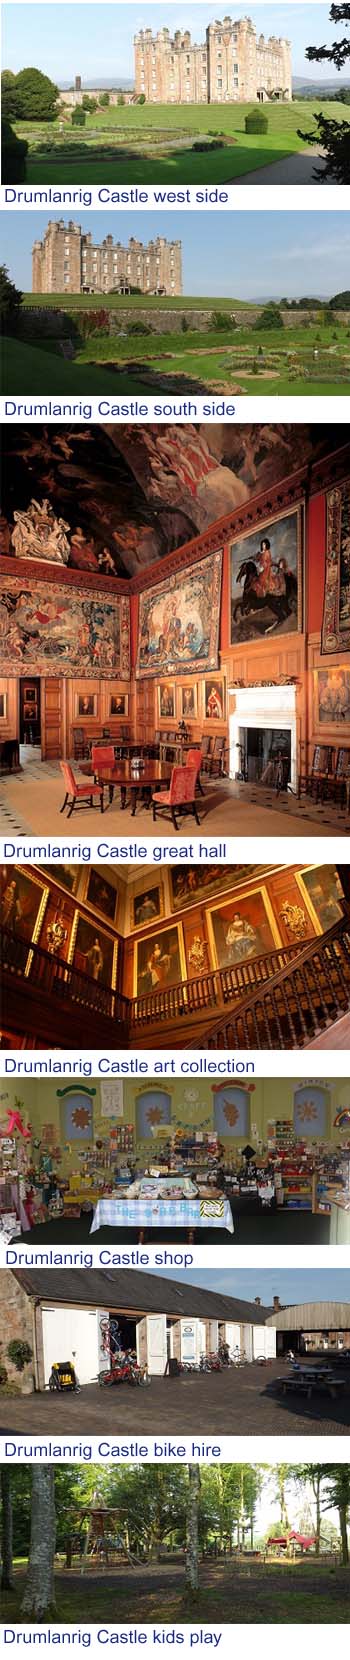 Drumlanrig Castle Images